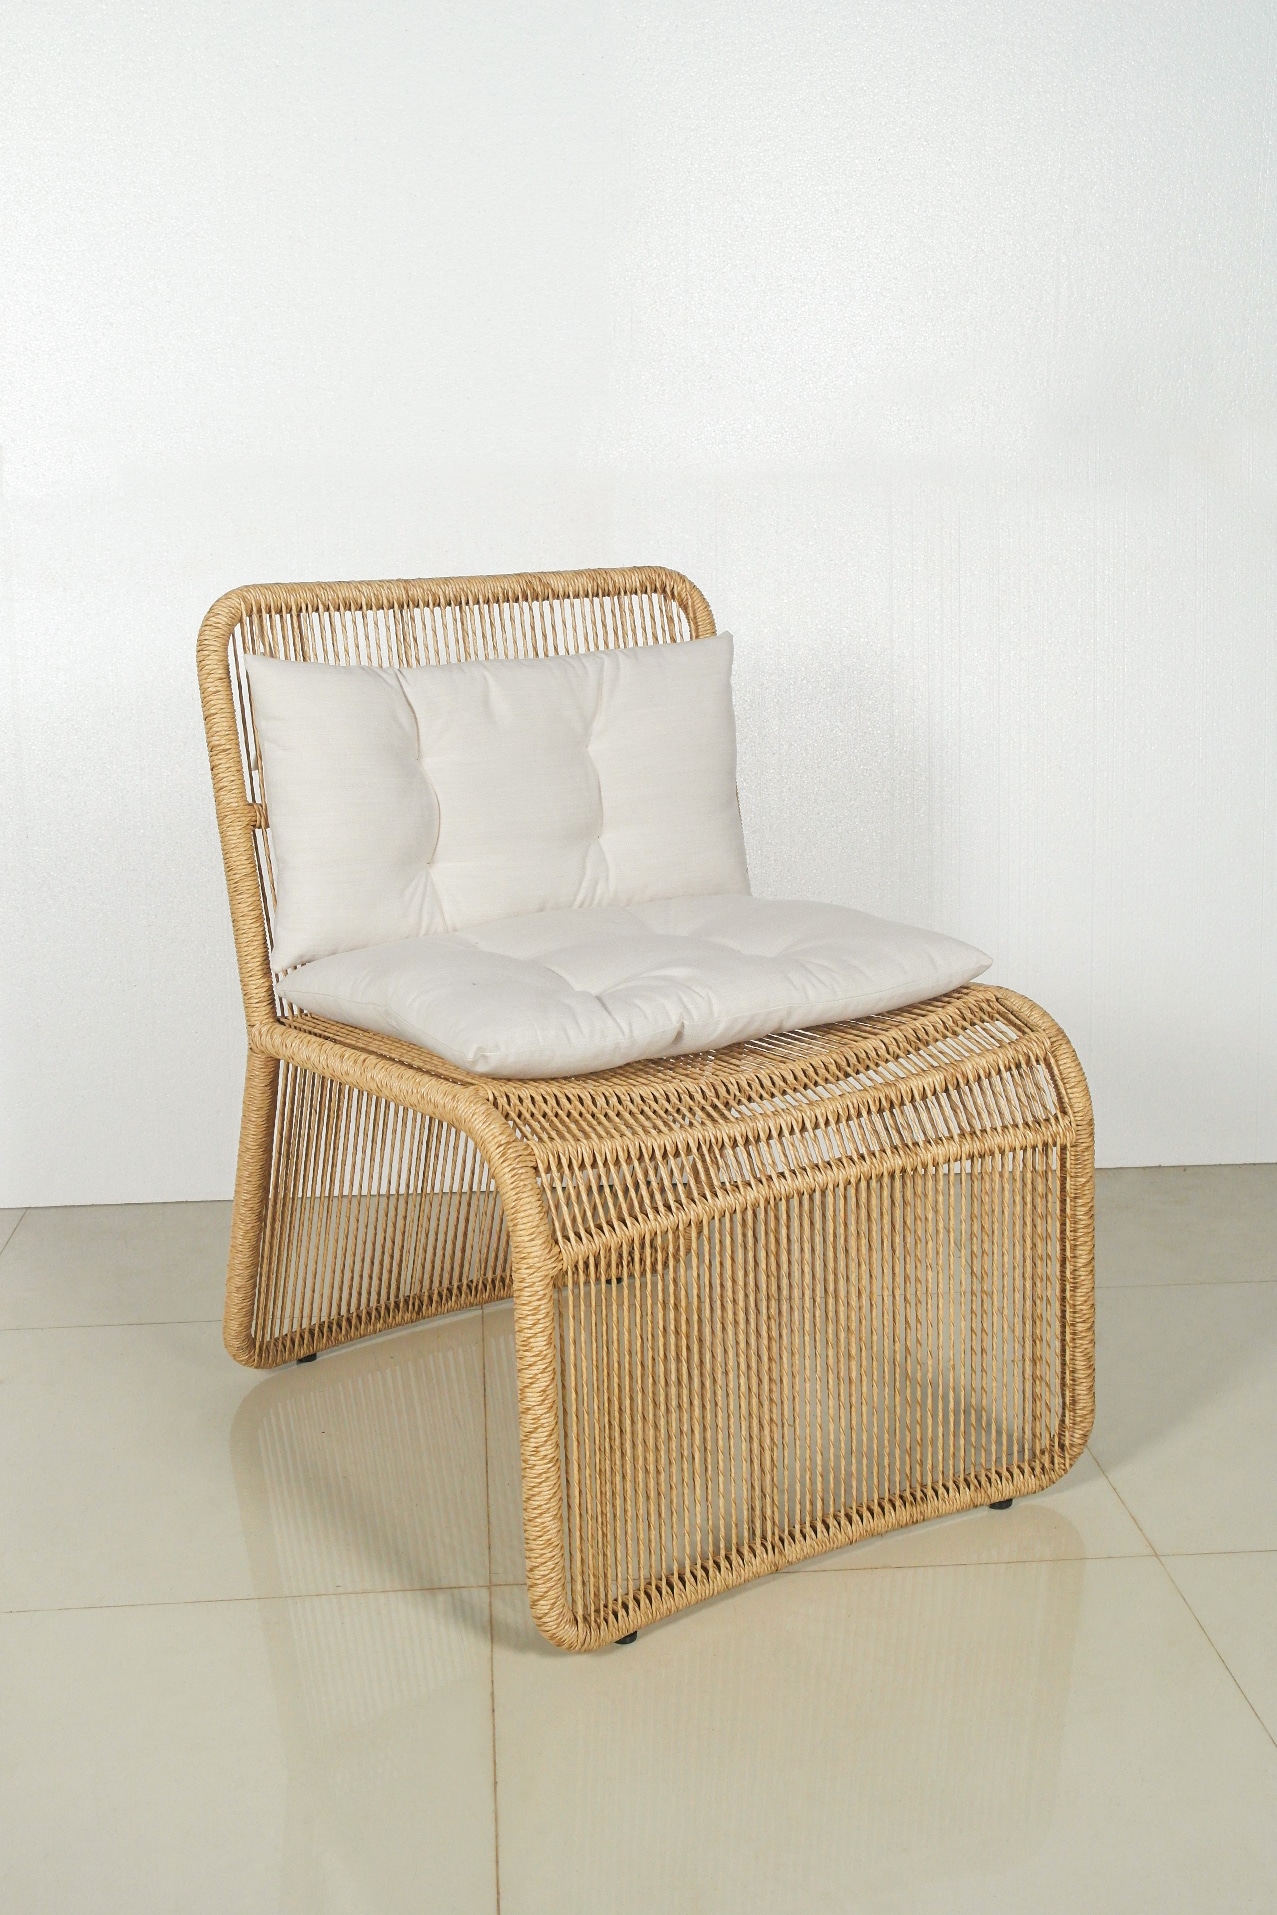 Design Assembly - Surin Villa Phuket - Bali Architect - Interior Design - Outdoor - Lounge Chair